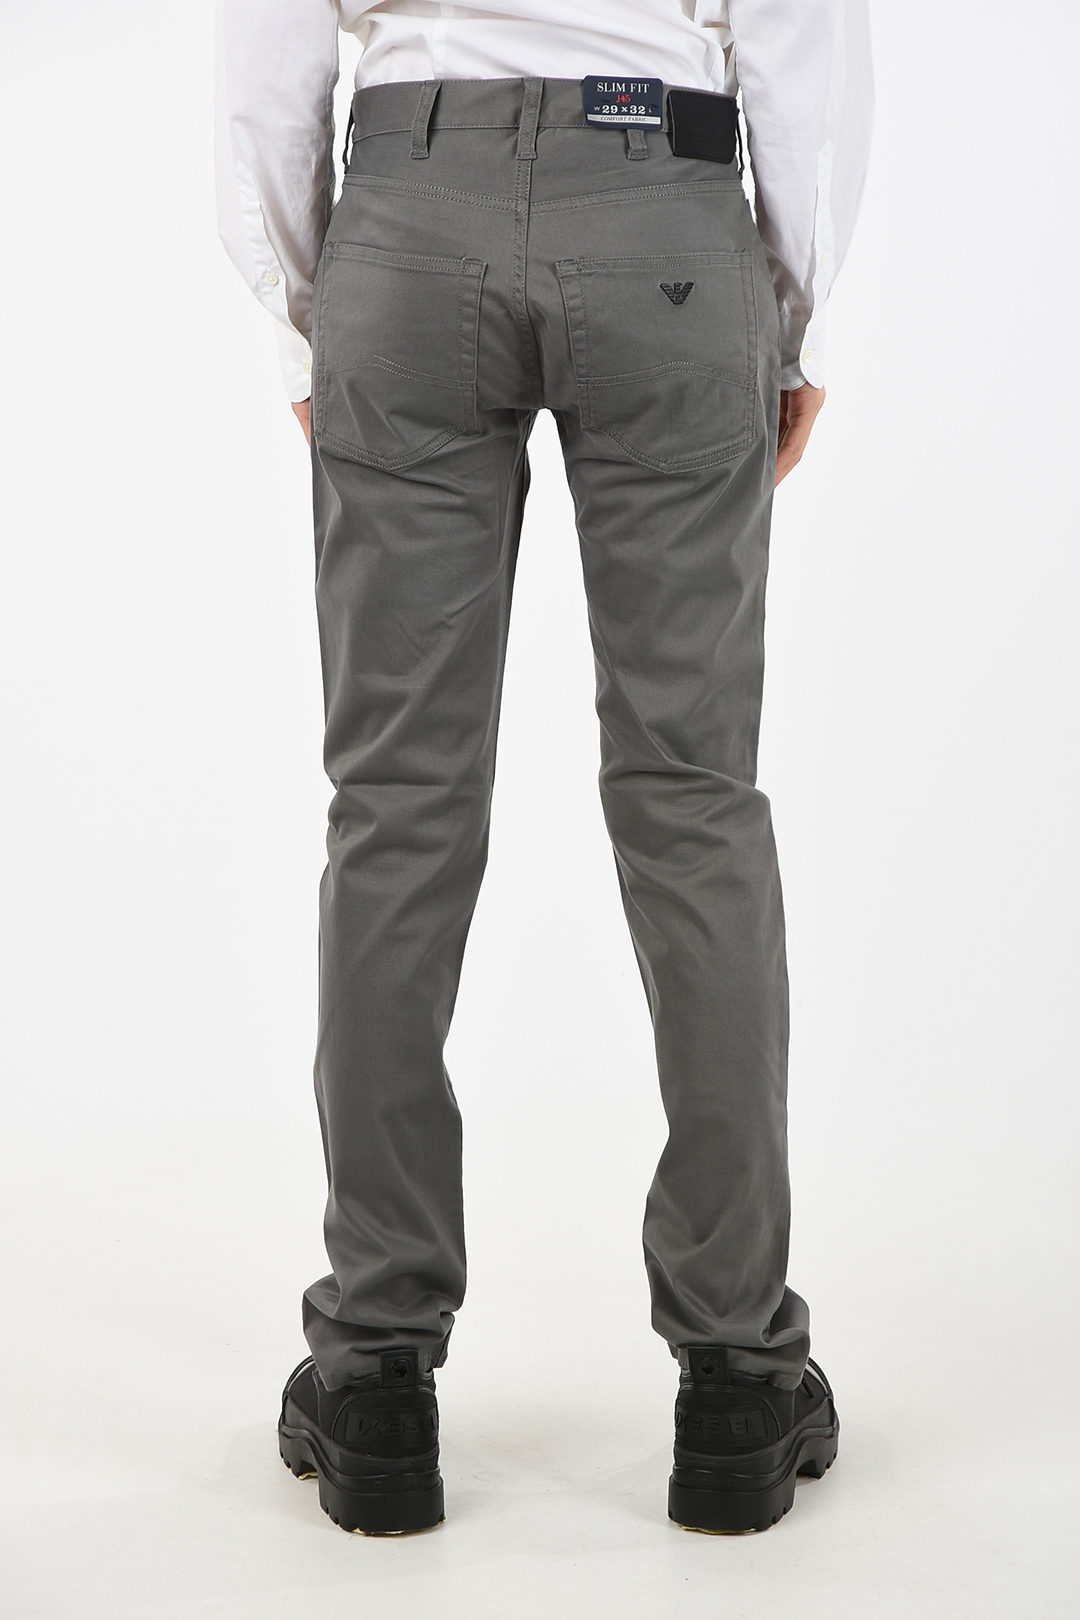 Emporio Armani side-zip Pocket Track Pants - Farfetch